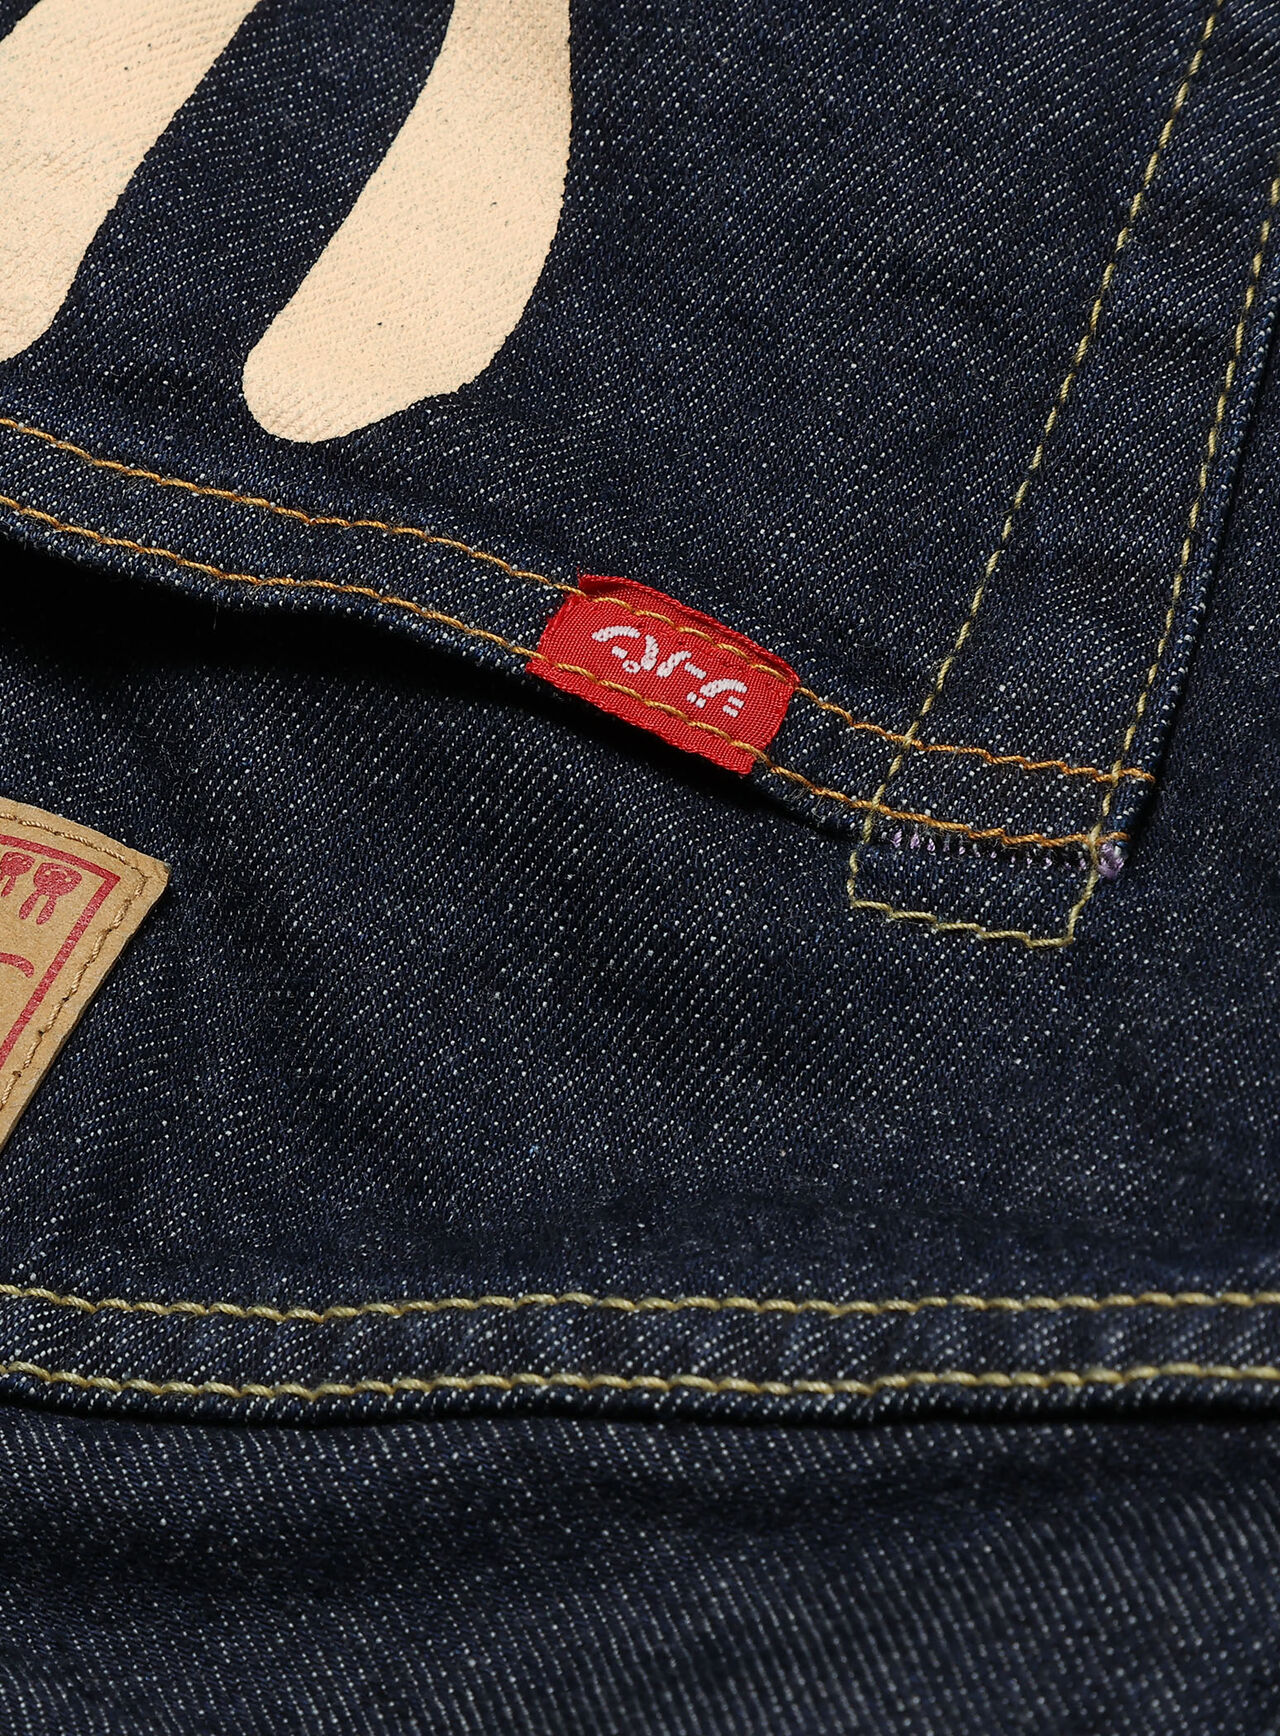 jeans - crotch 22-U2,M, large image number 5